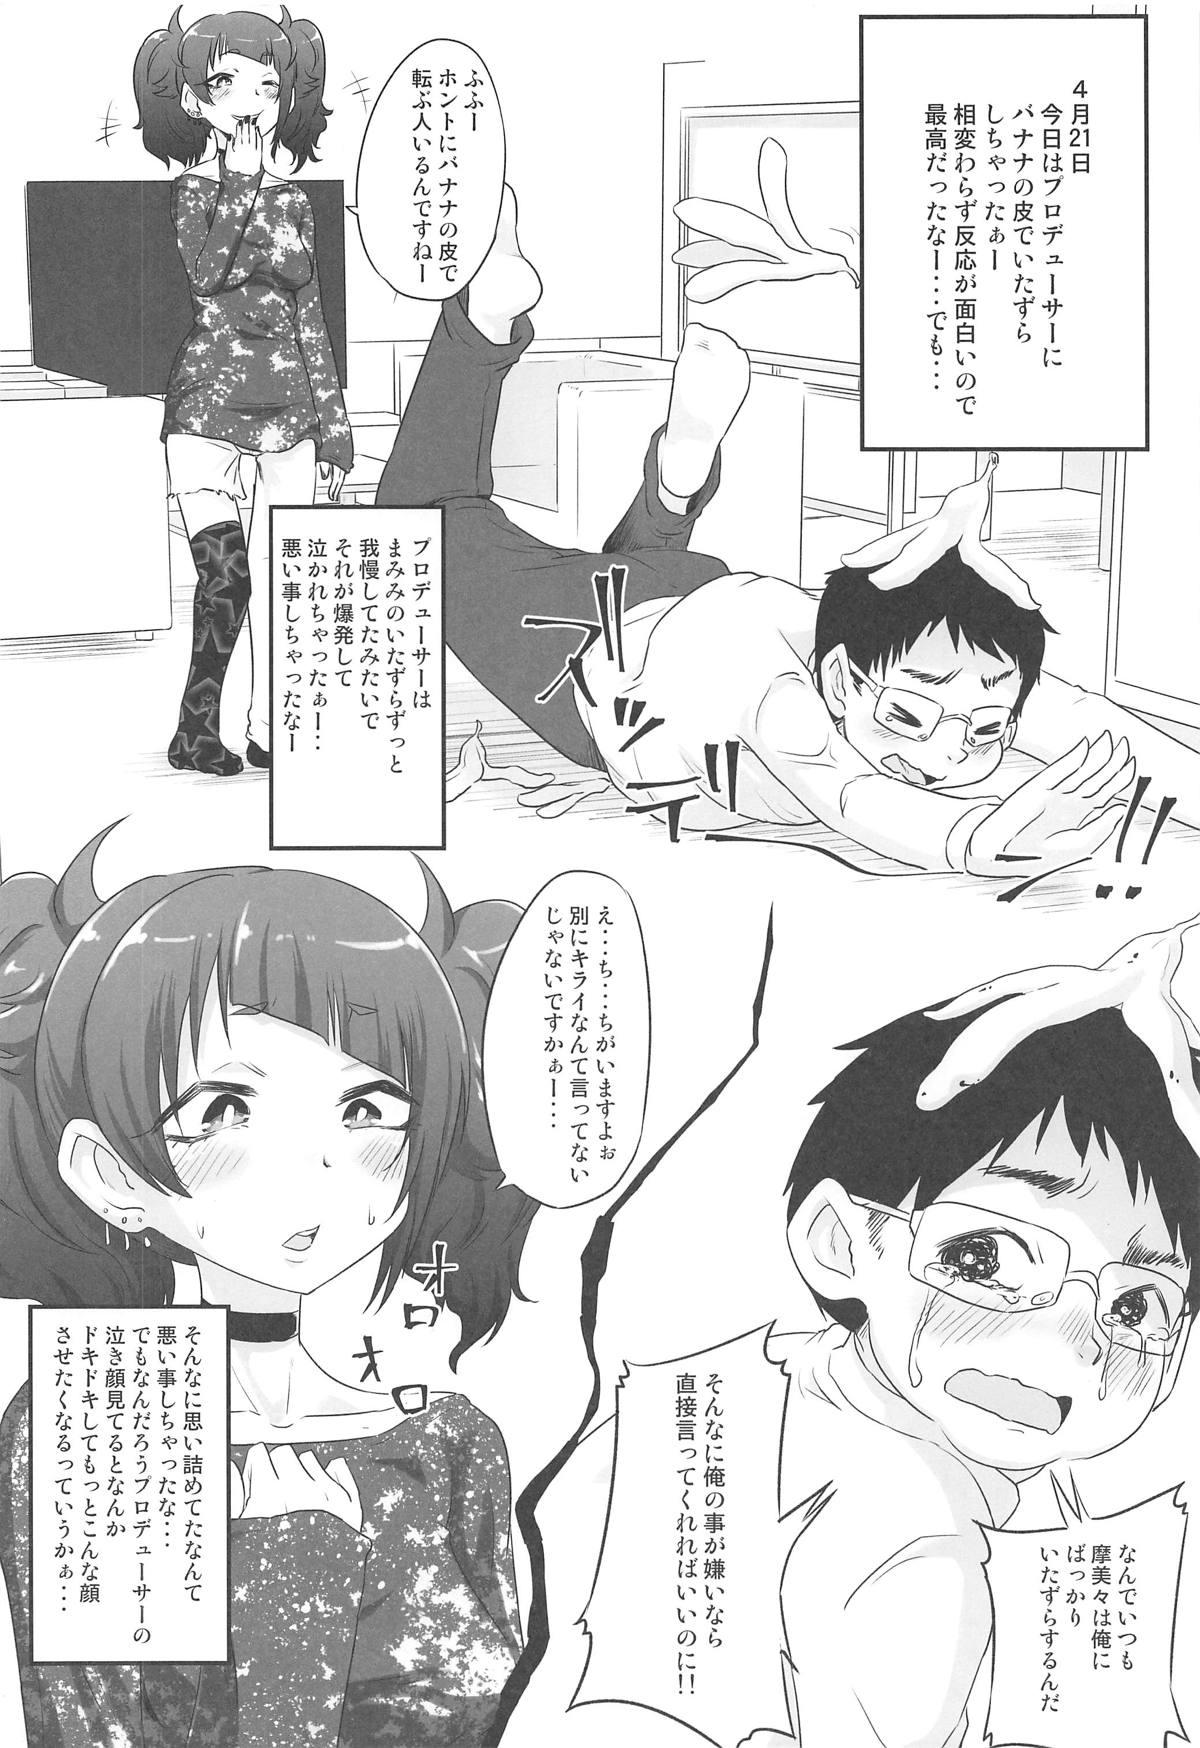 Bulge Mamimi no Itazura Nikki - The idolmaster Facial - Page 3